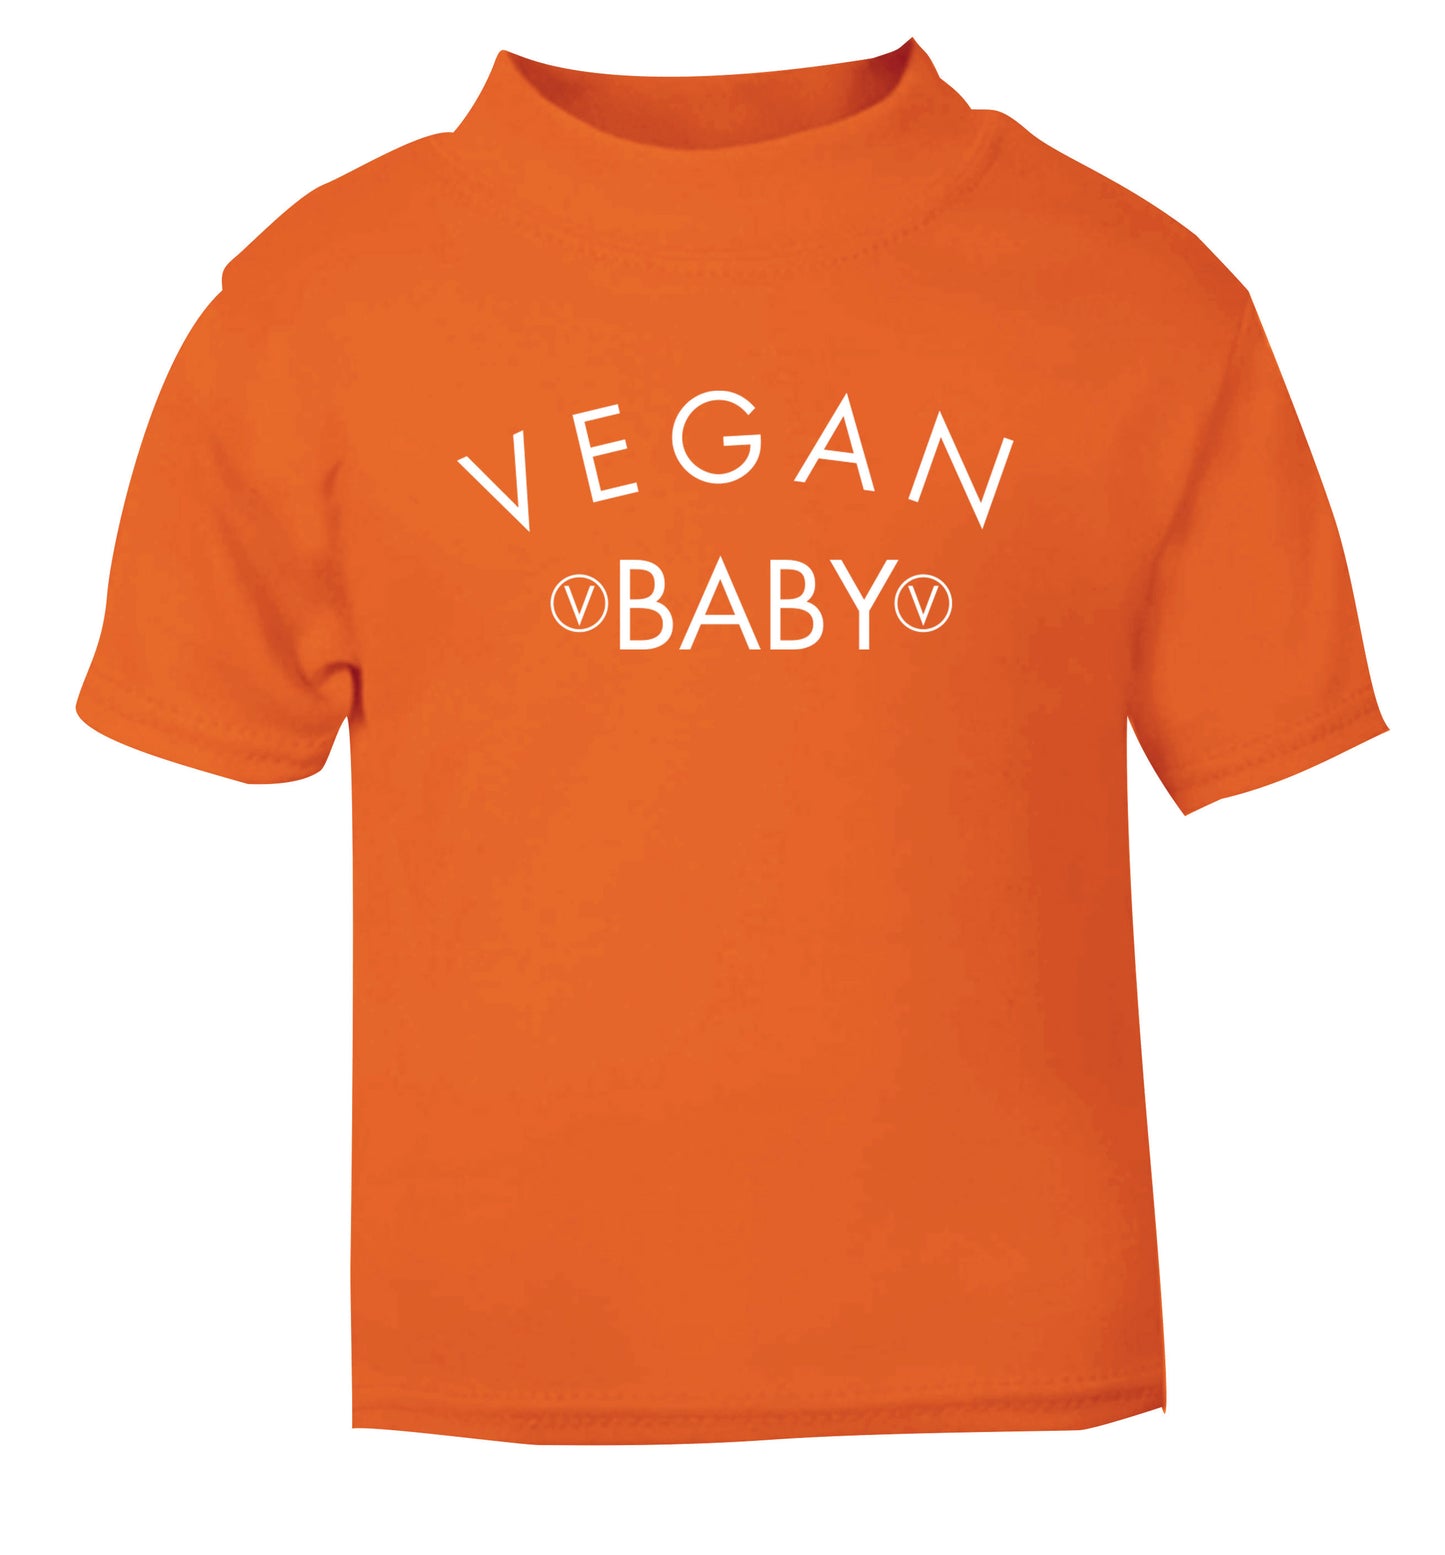 Vegan baby orange Baby Toddler Tshirt 2 Years